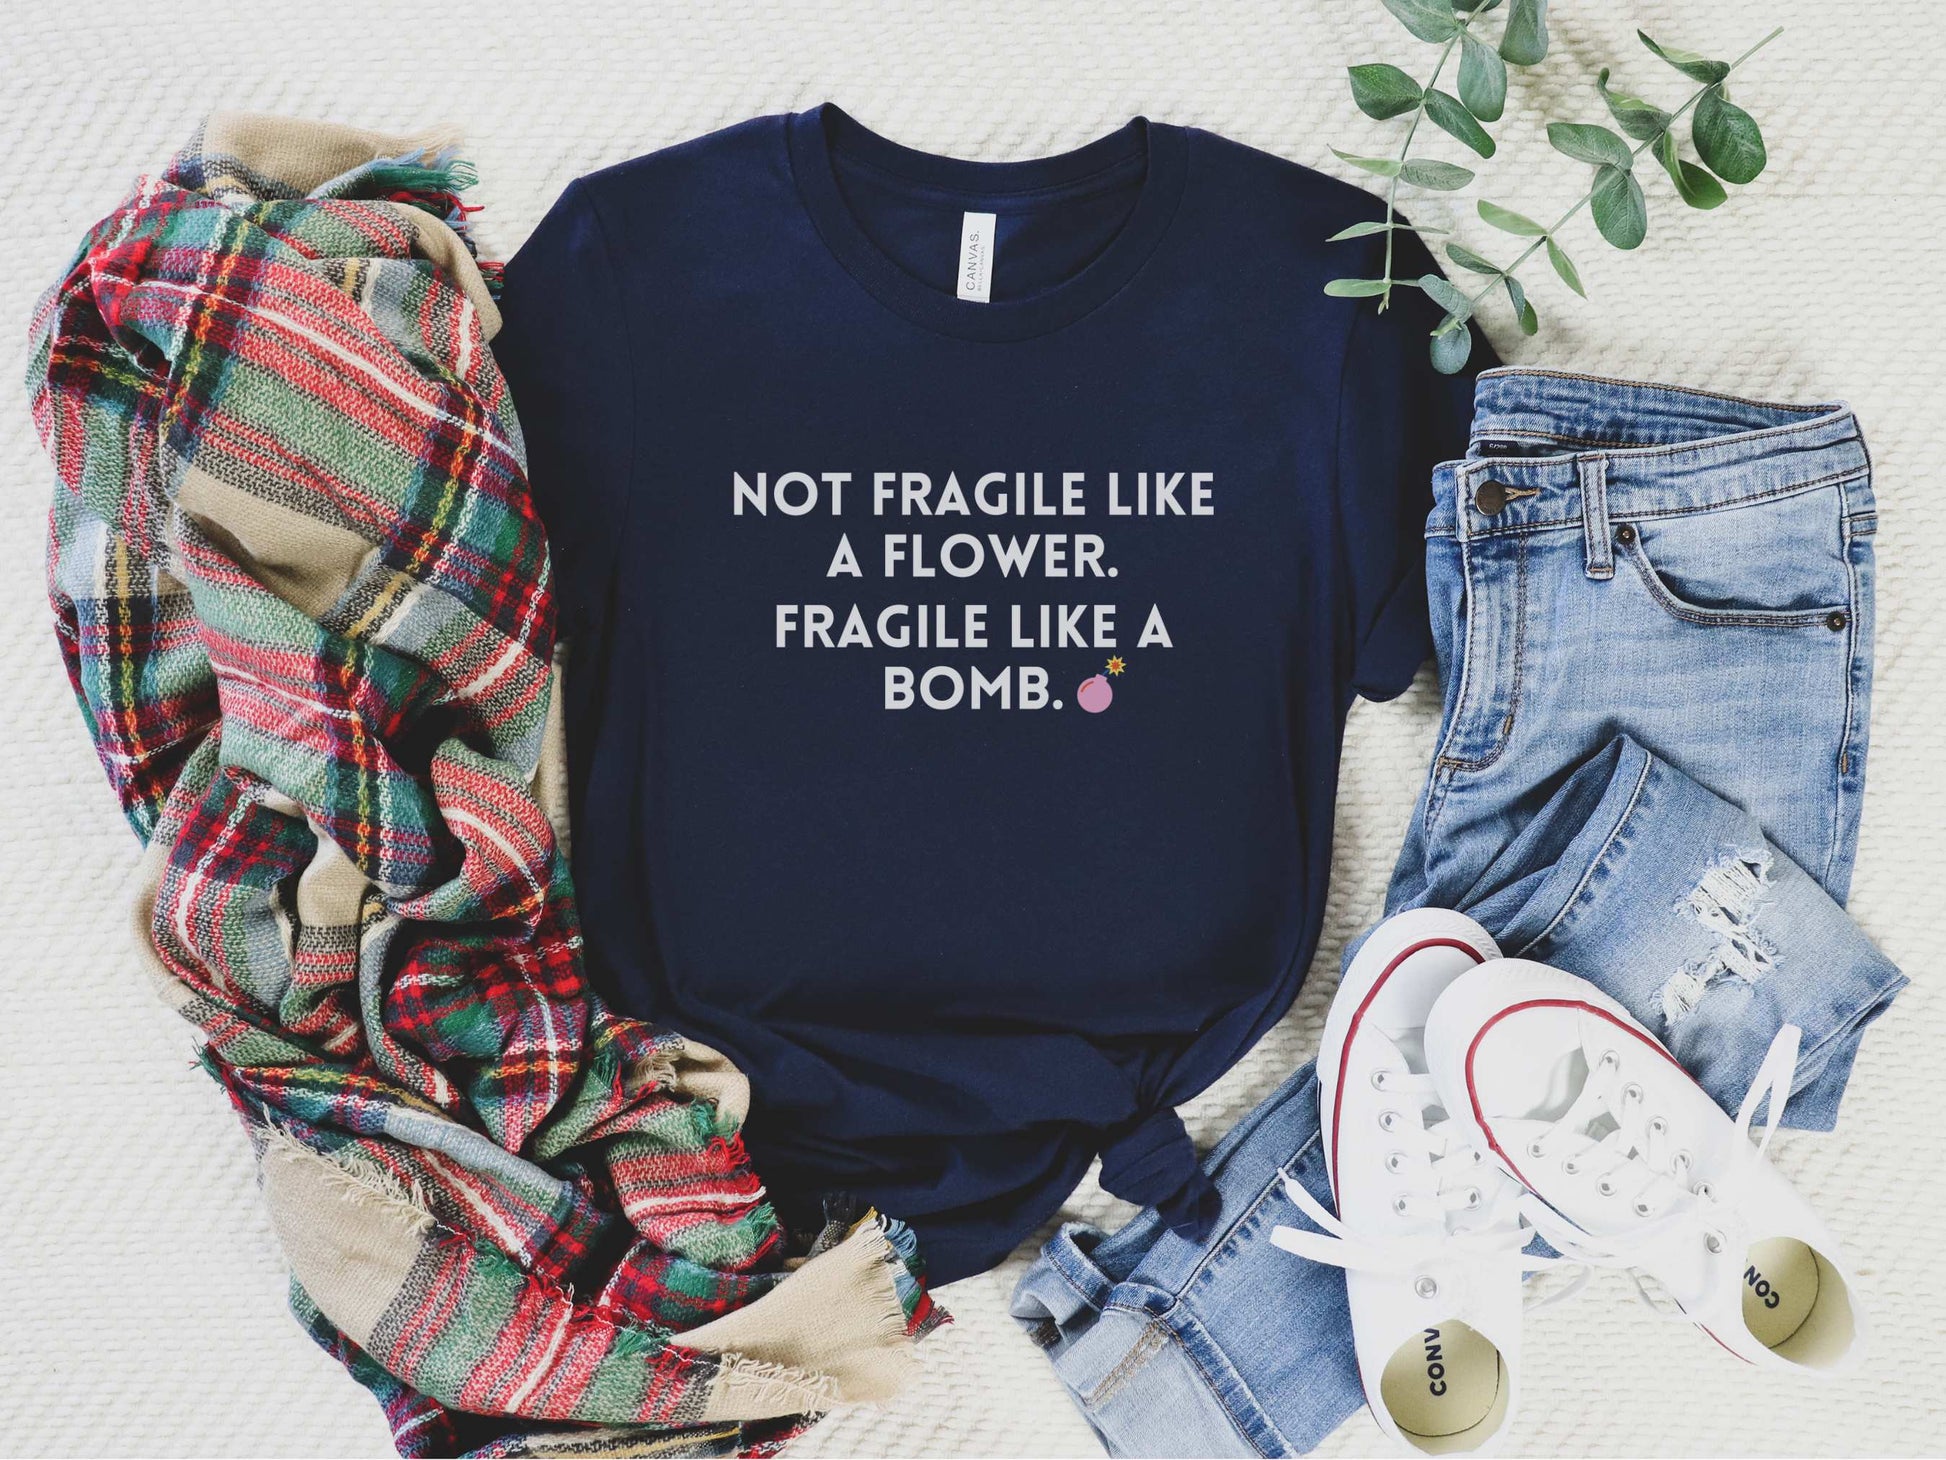 Fragile Like a Bomb Frida Kahlo T-Shirt in Navy